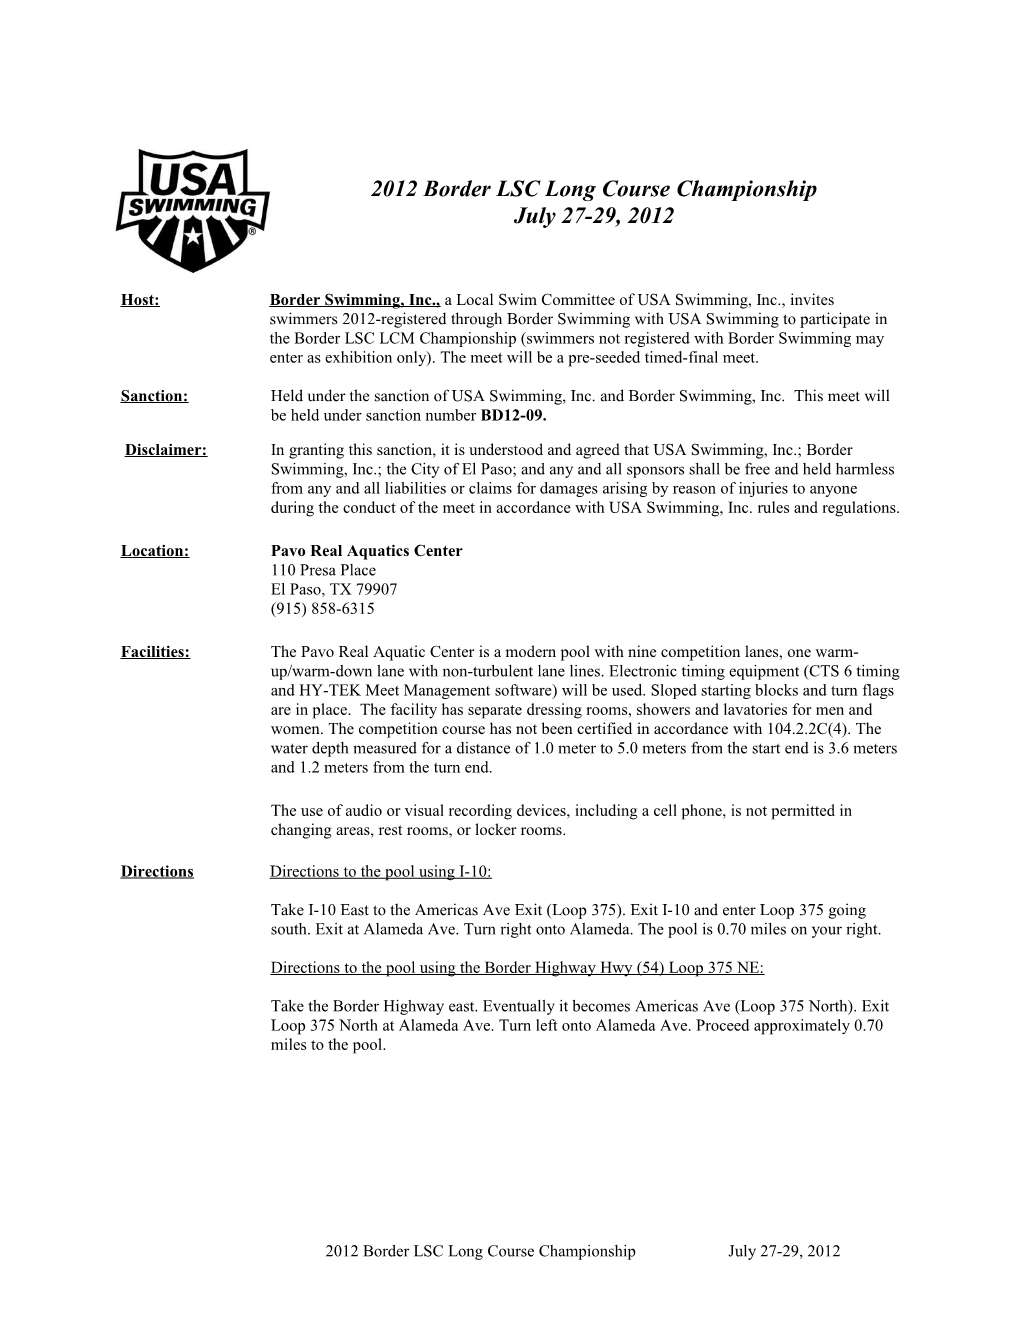 2004 Border LSC Championship Meet Invitation